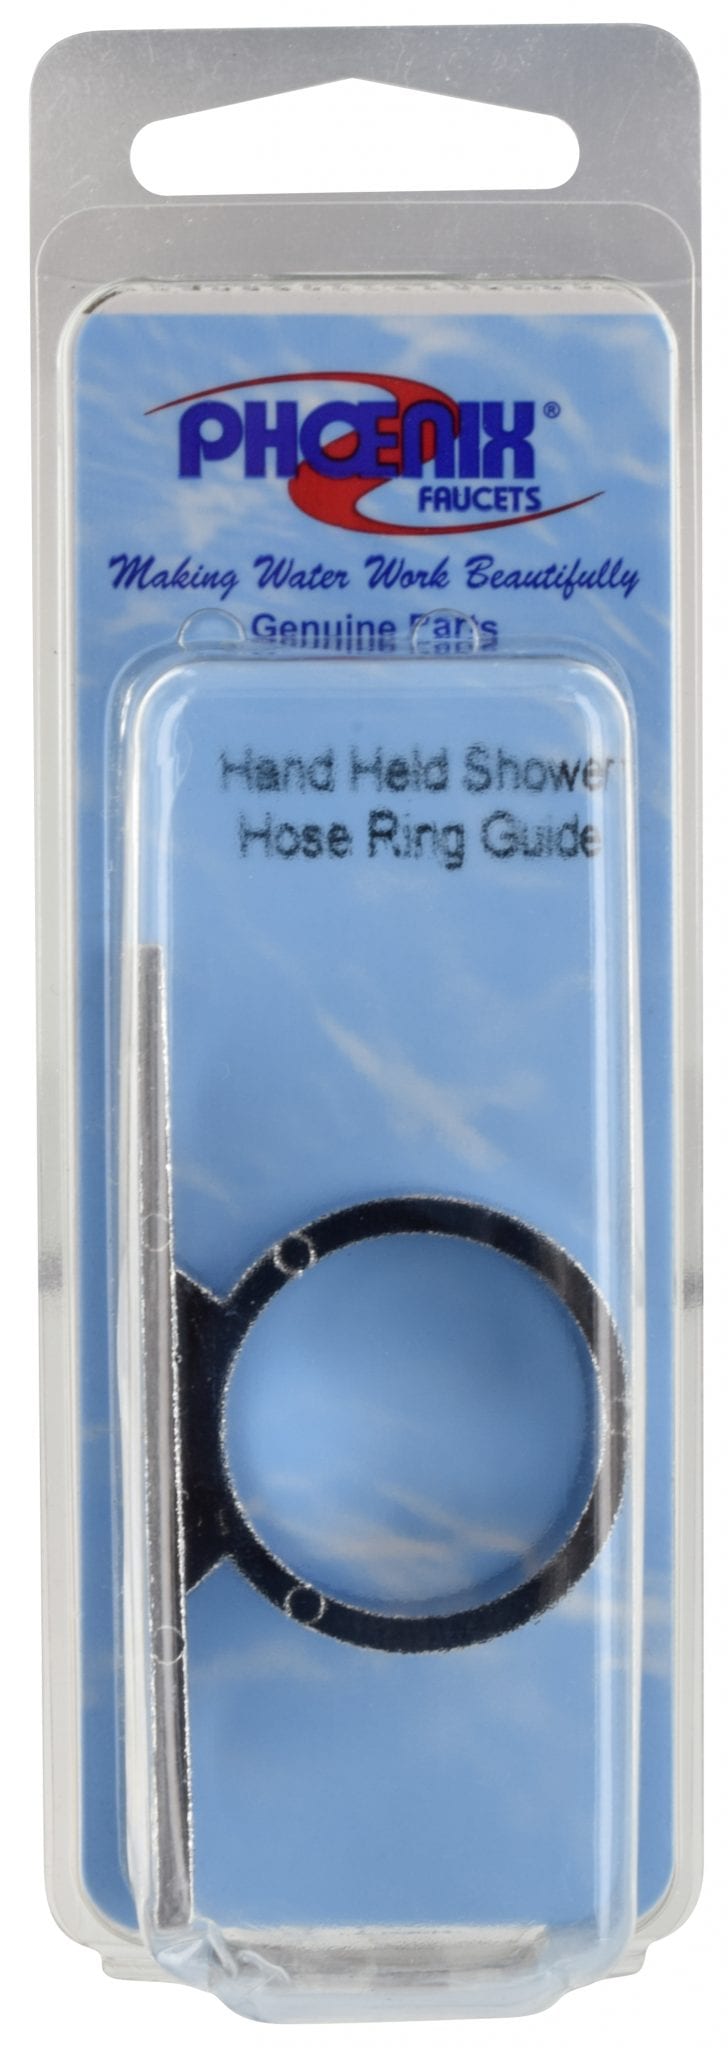 Replacement Shower Hose Guide - Chrome  PF276013